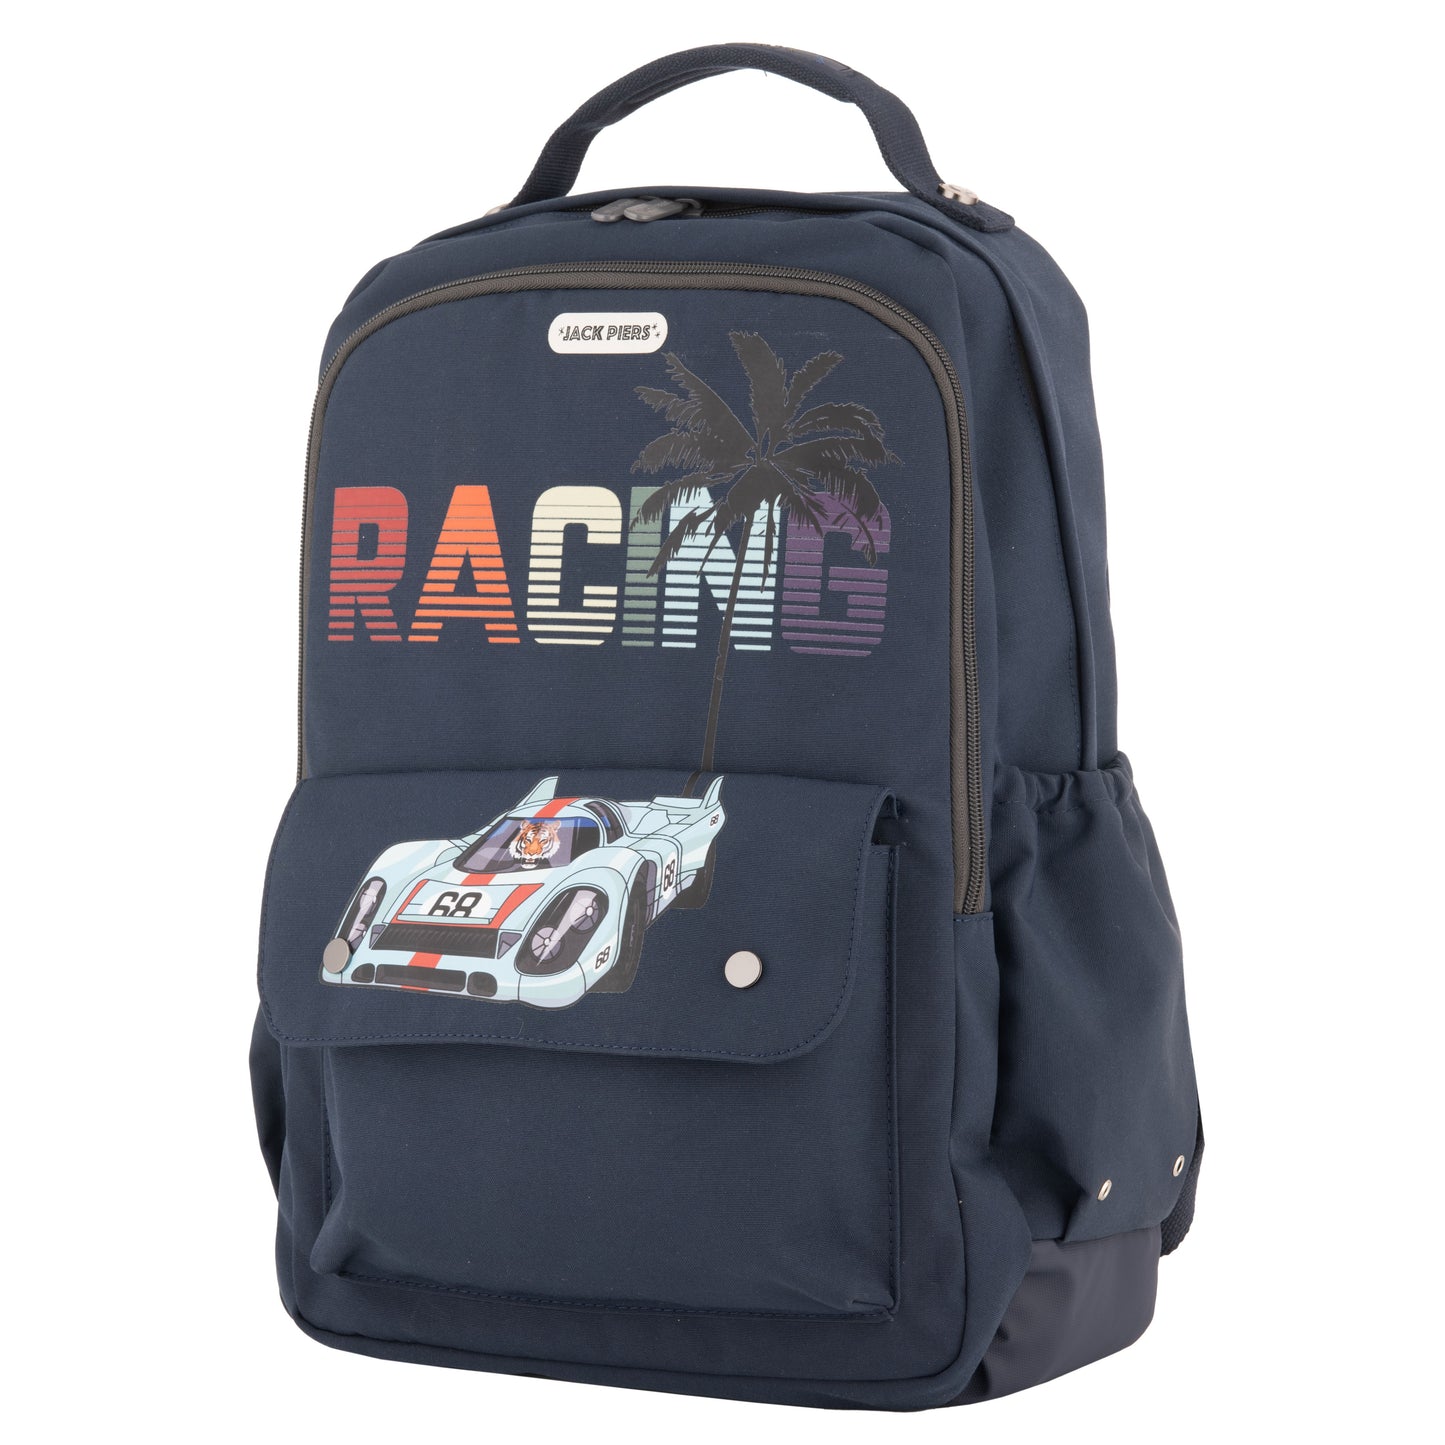 Jack Piers Rugzak/Backpack New York Race - 36x13x29cm - Blauw